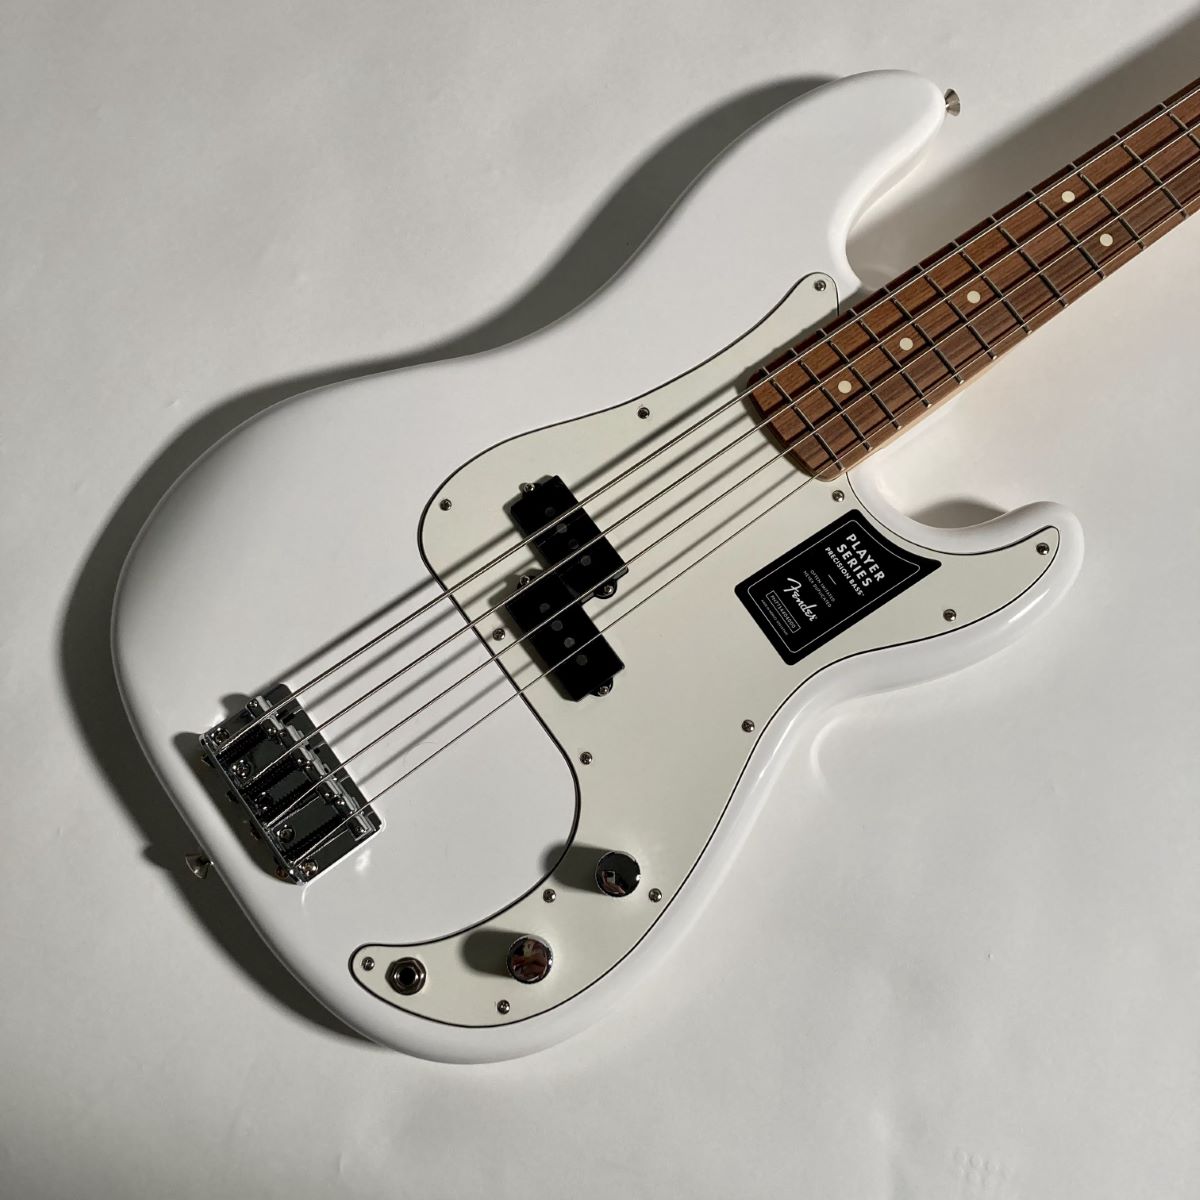 Fender Player Series PrecisionBass White